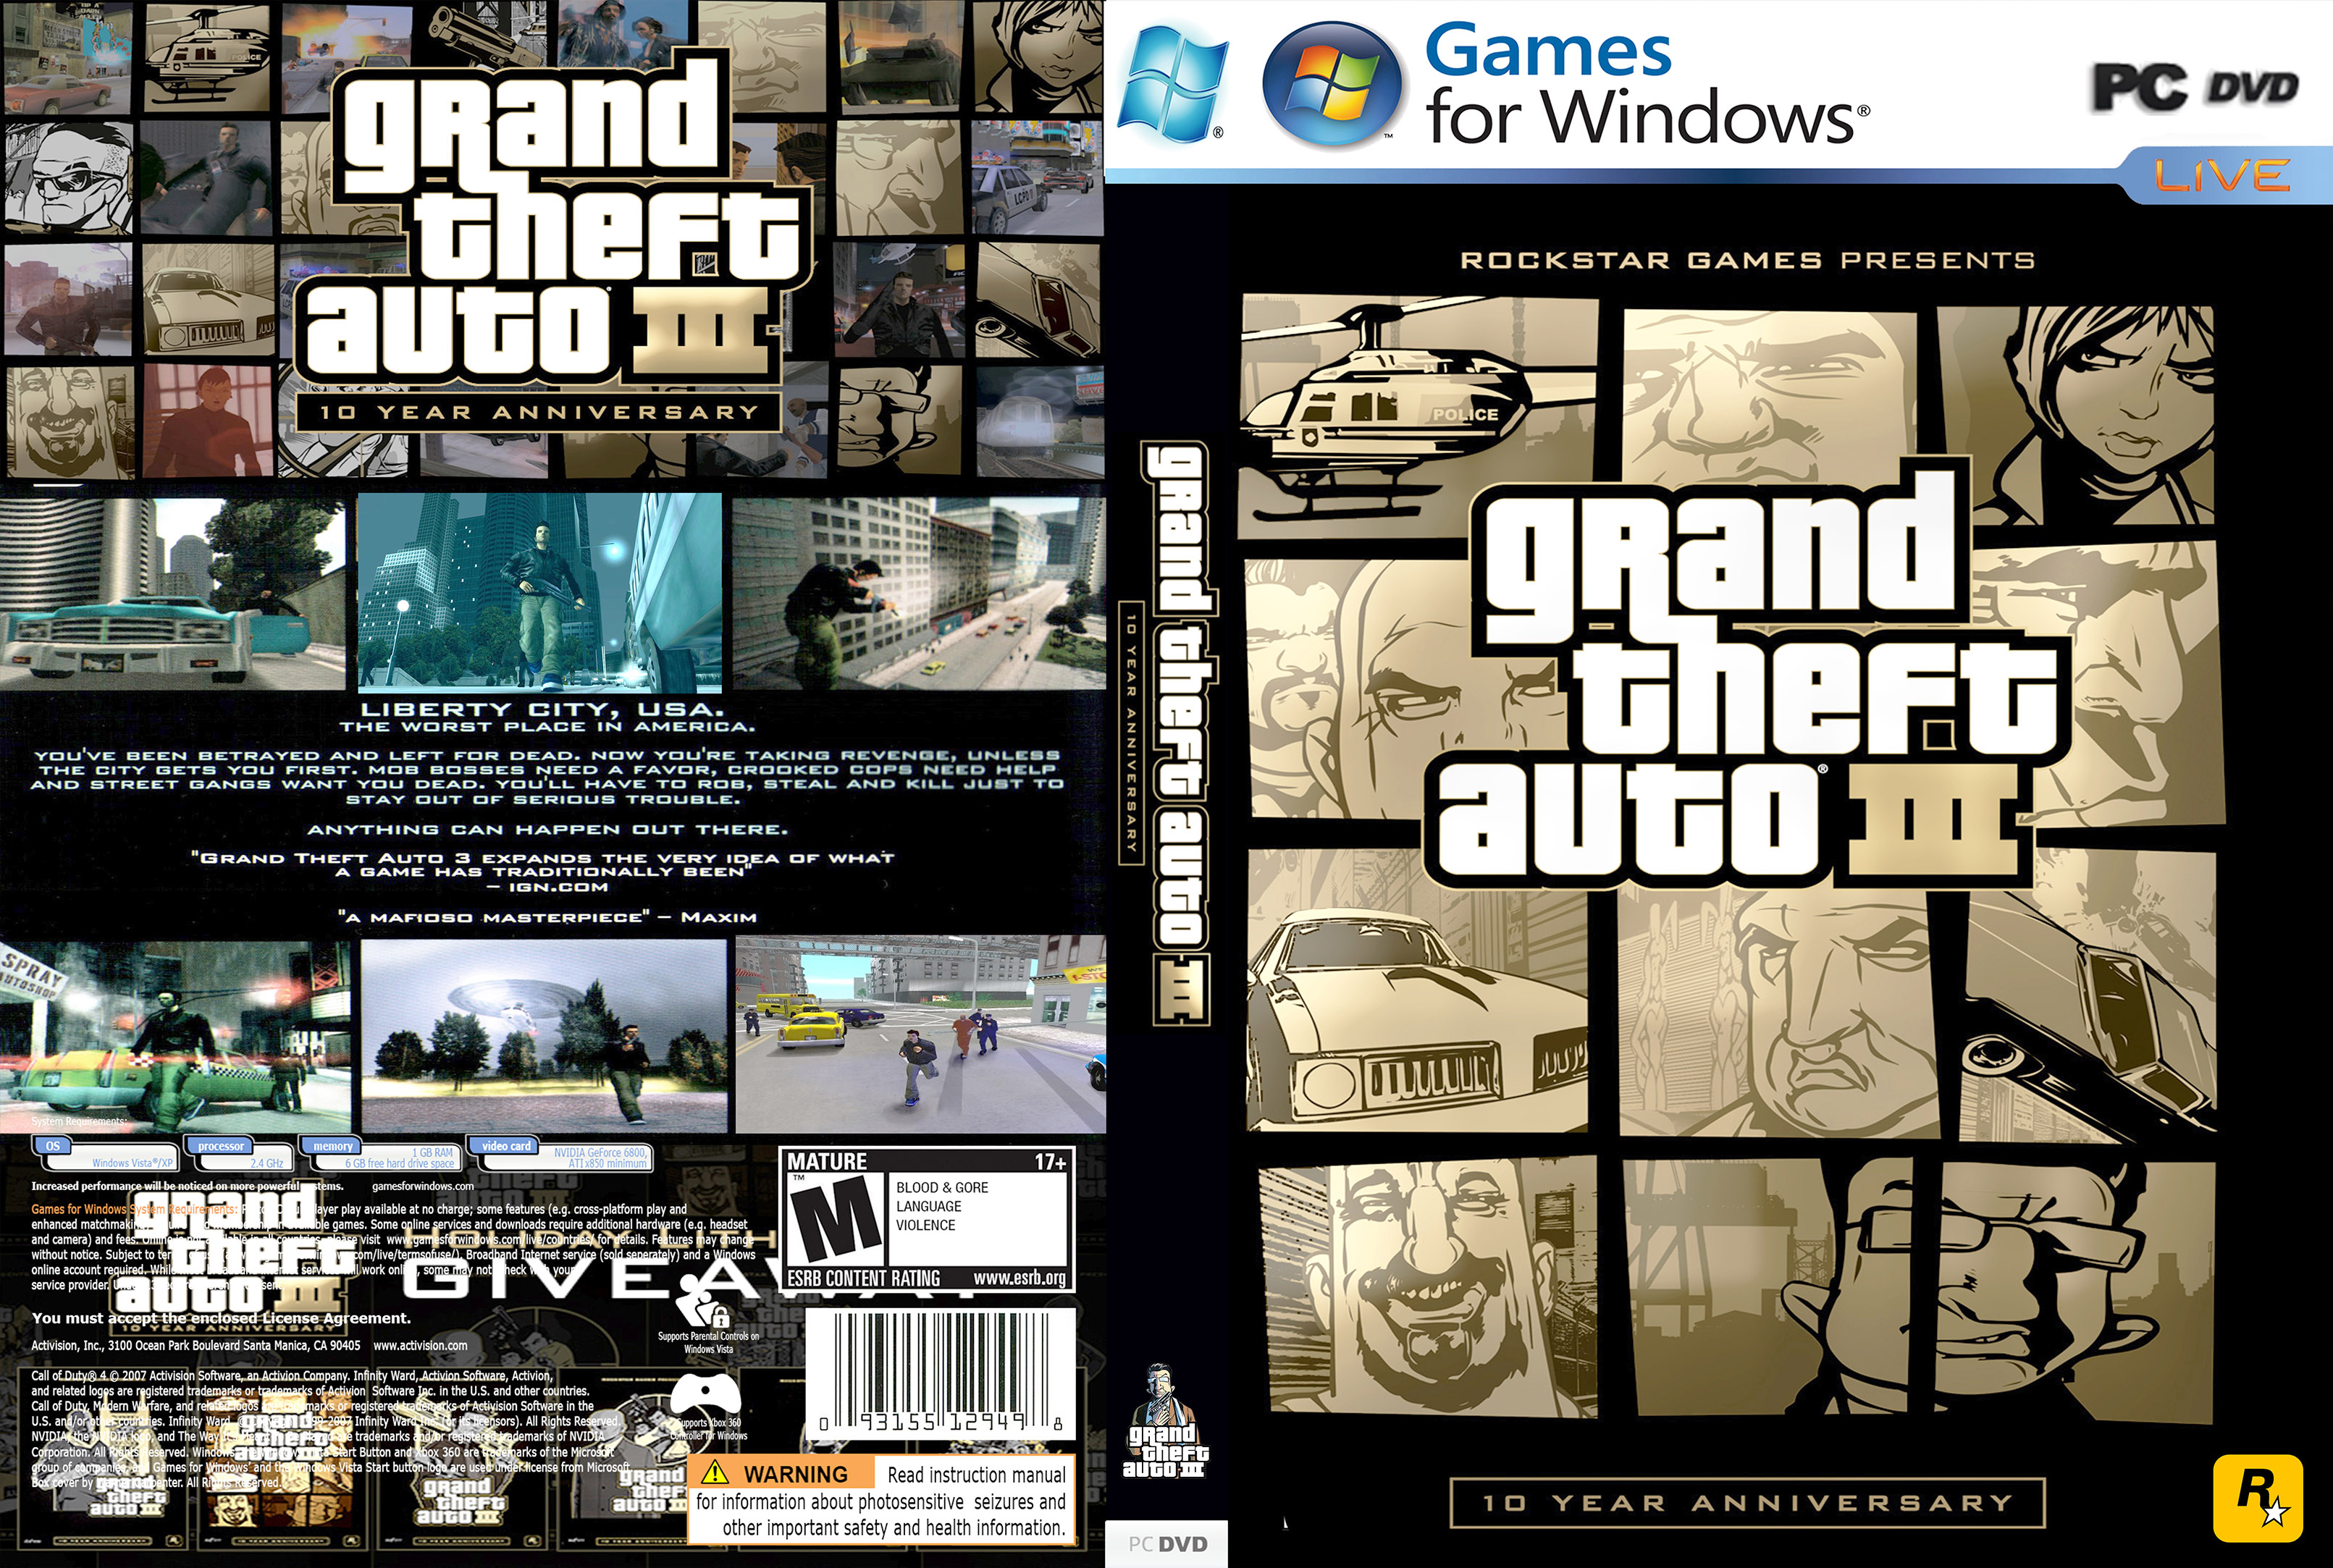 Grand Theft Auto III: 10 Year Anniversary PC Edition V4.1.5 (Win 7